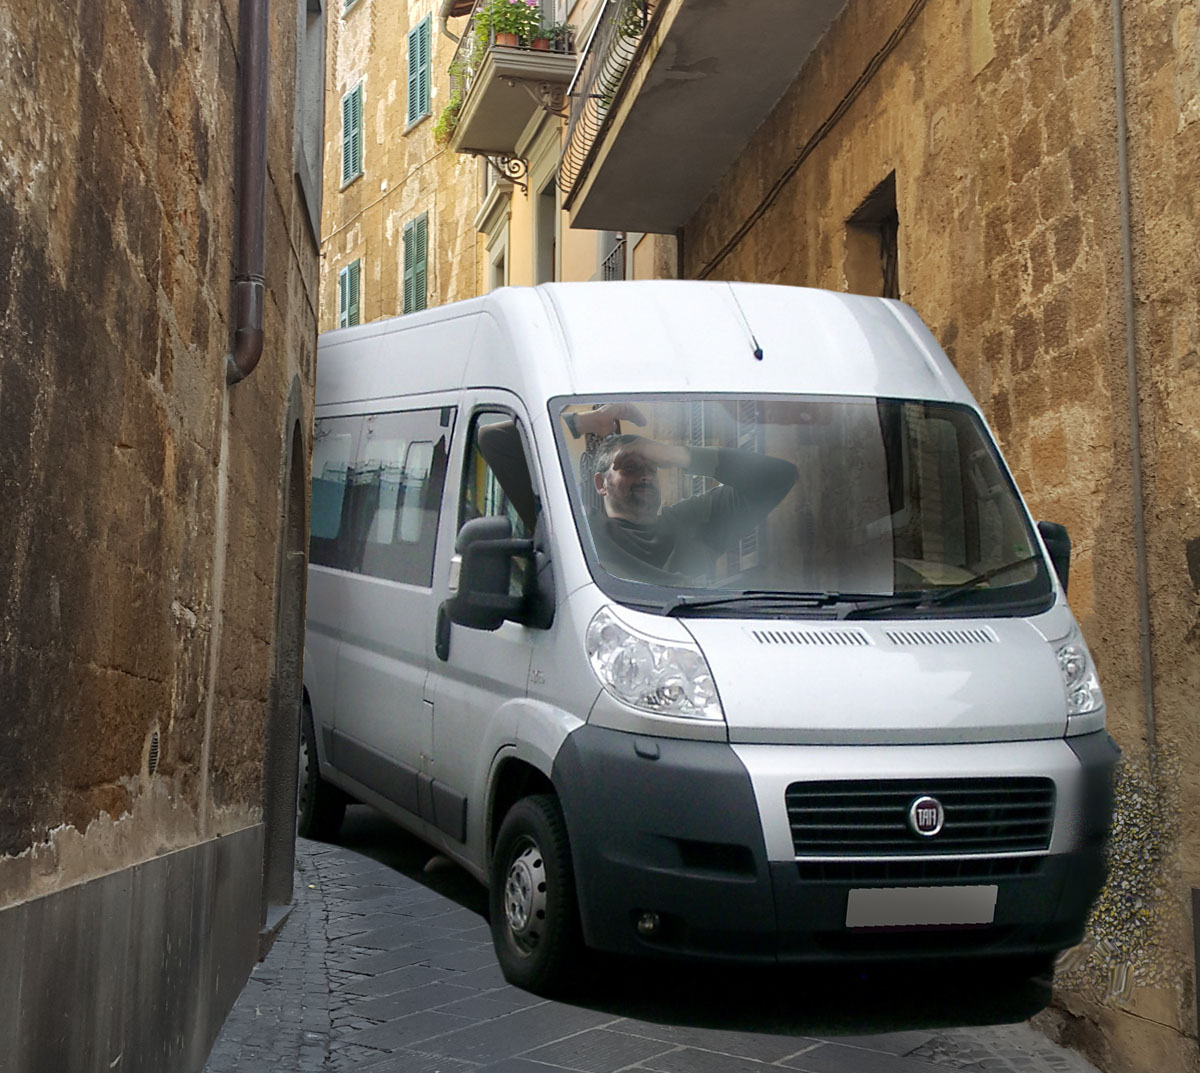 Ducato da Fiat – uma van enorme de nove lugares